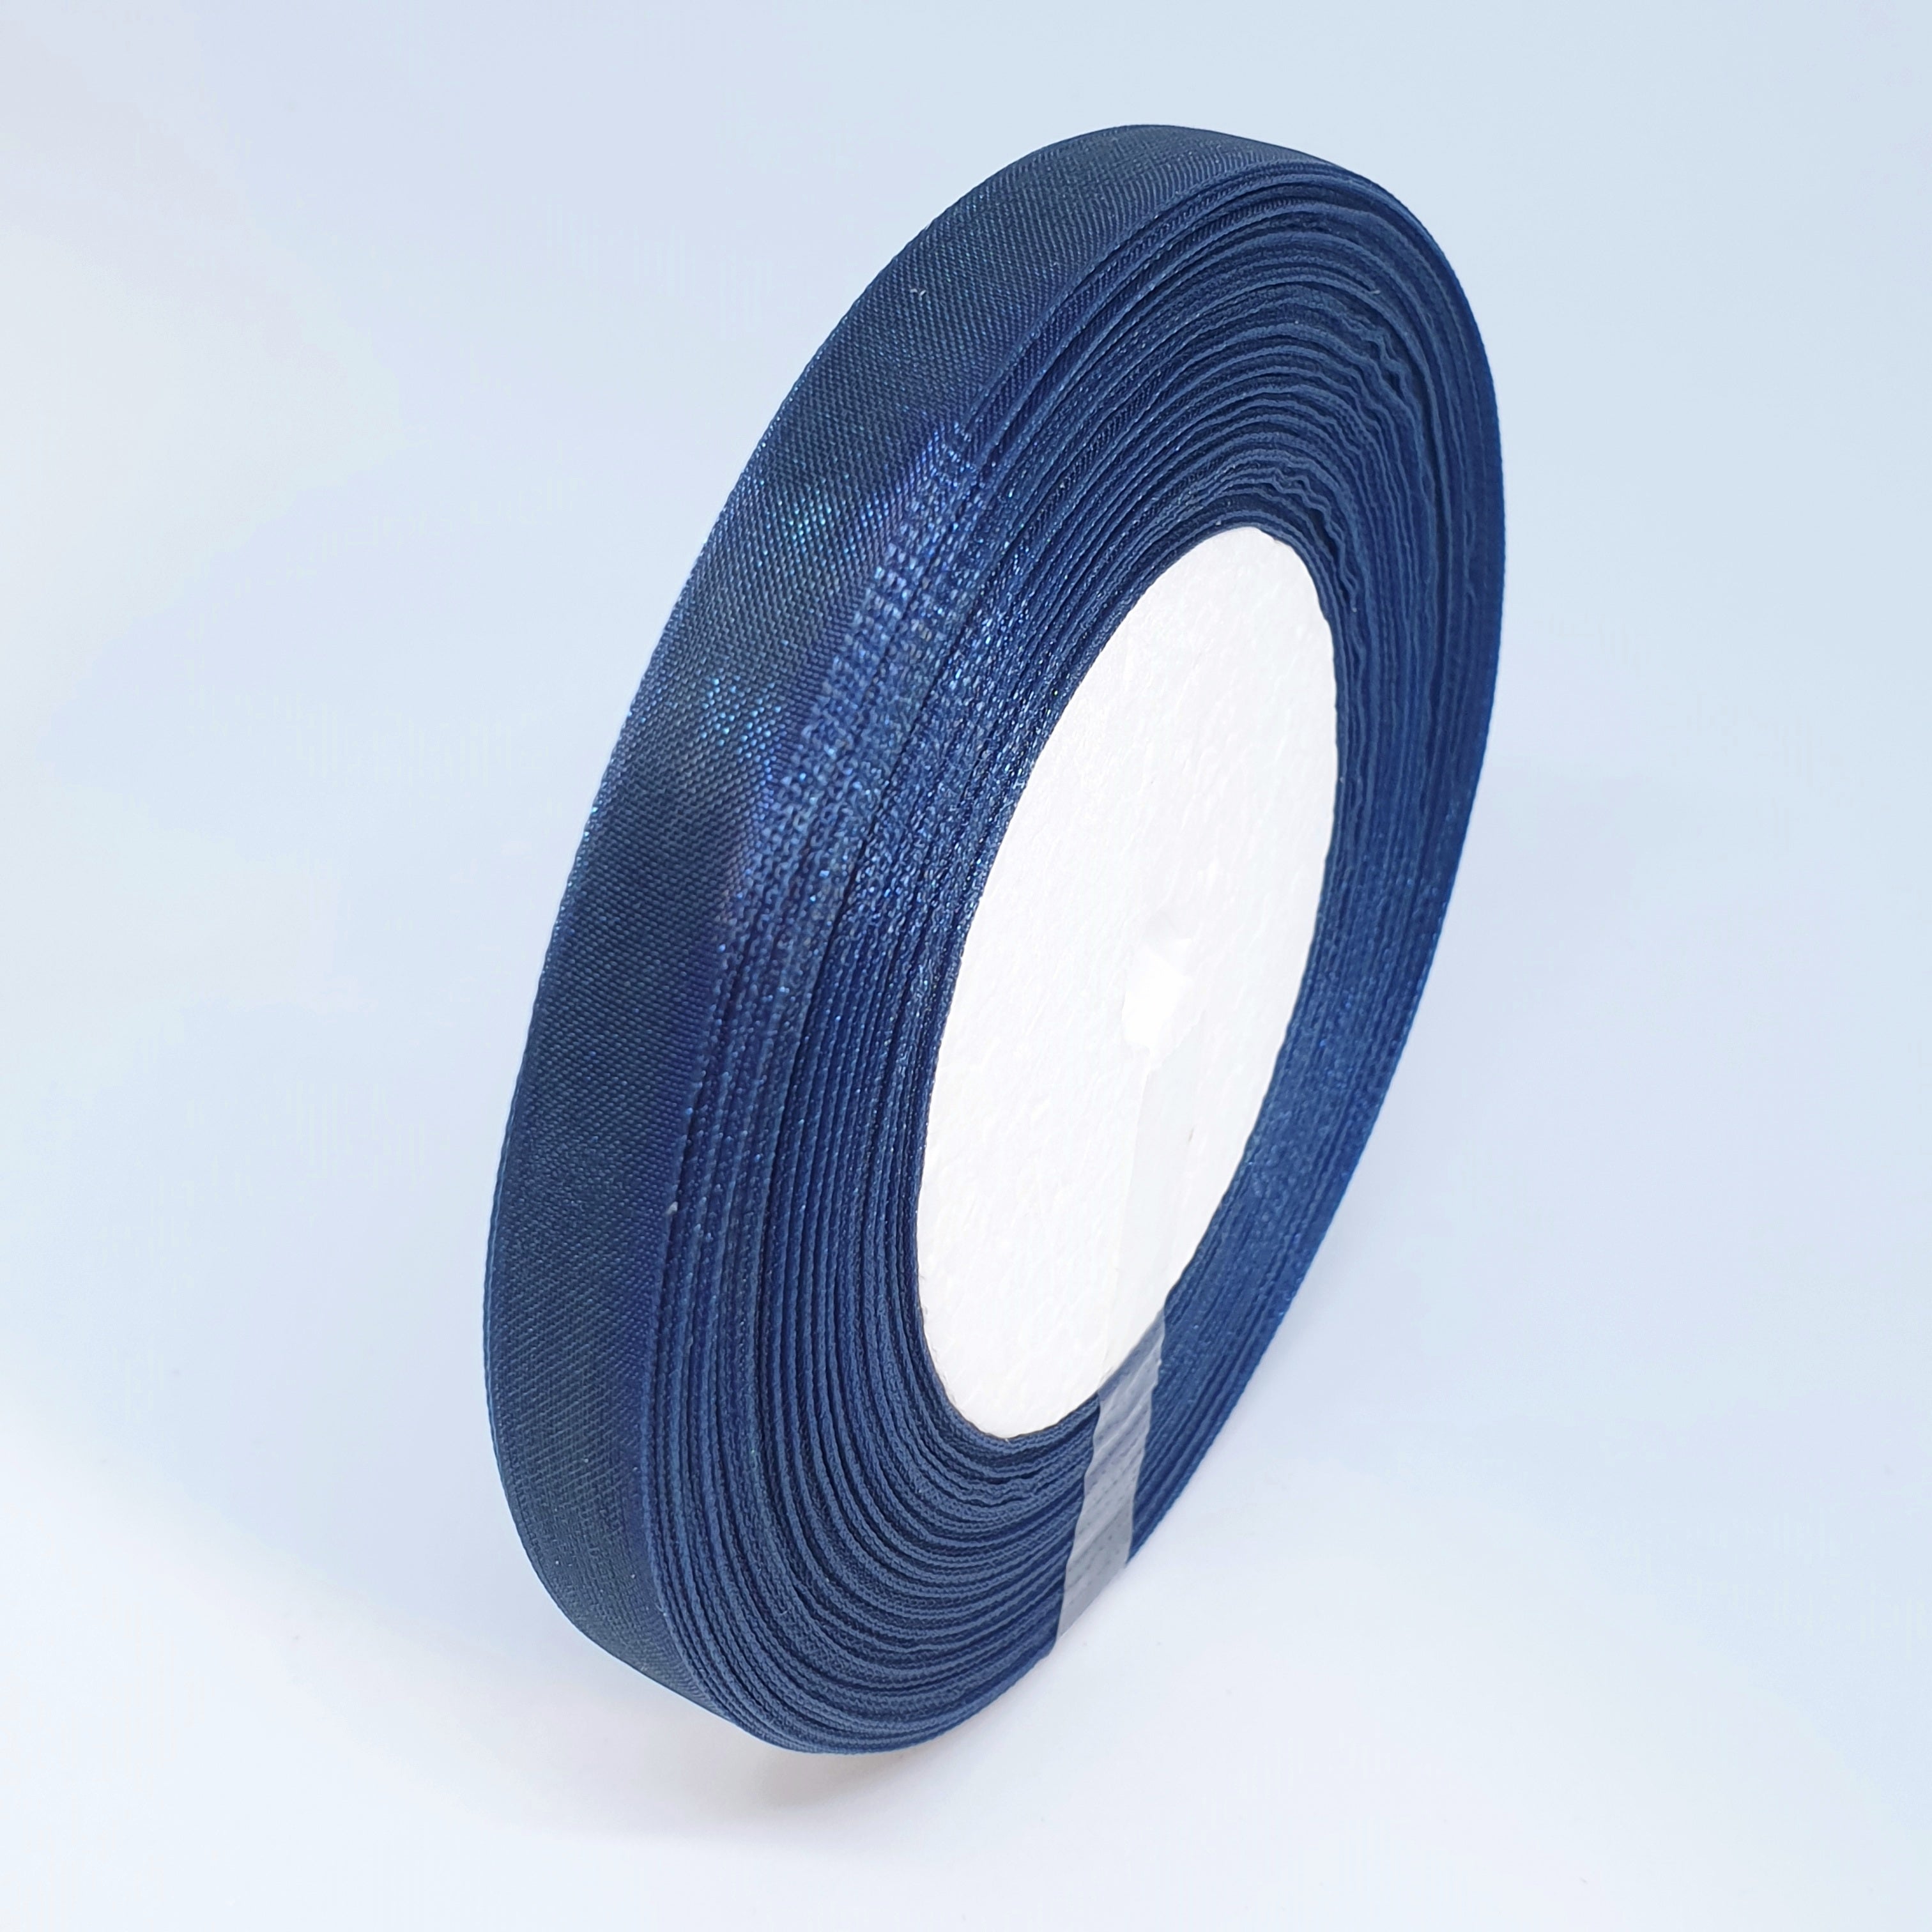 MajorCrafts 10mm 45metres Deep Blue Sheer Organza Fabric Ribbon Roll